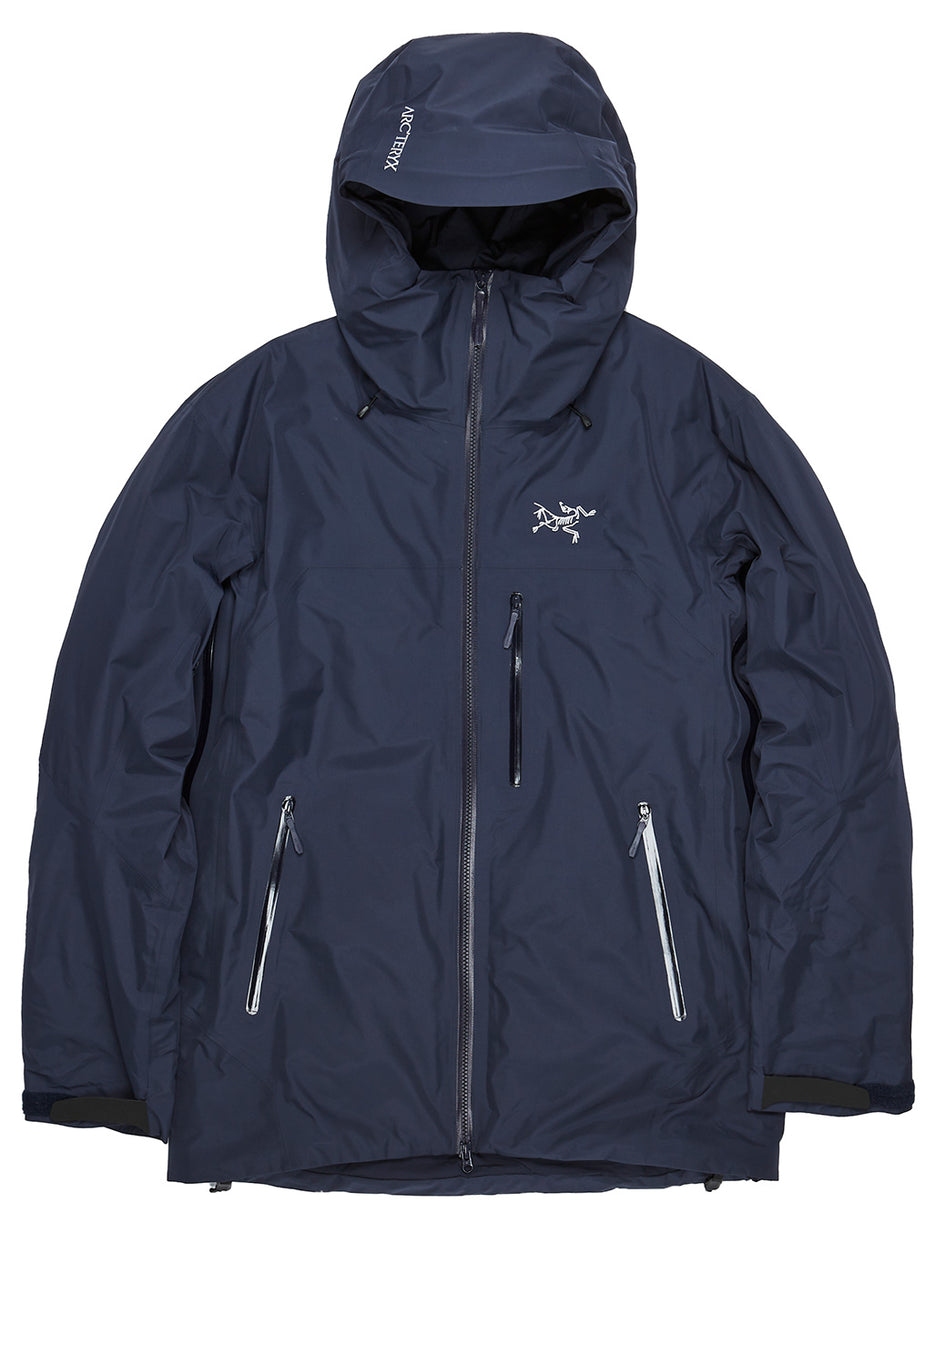 Arcteryx chaqueta Zeta FL Gore-Tex en promoción